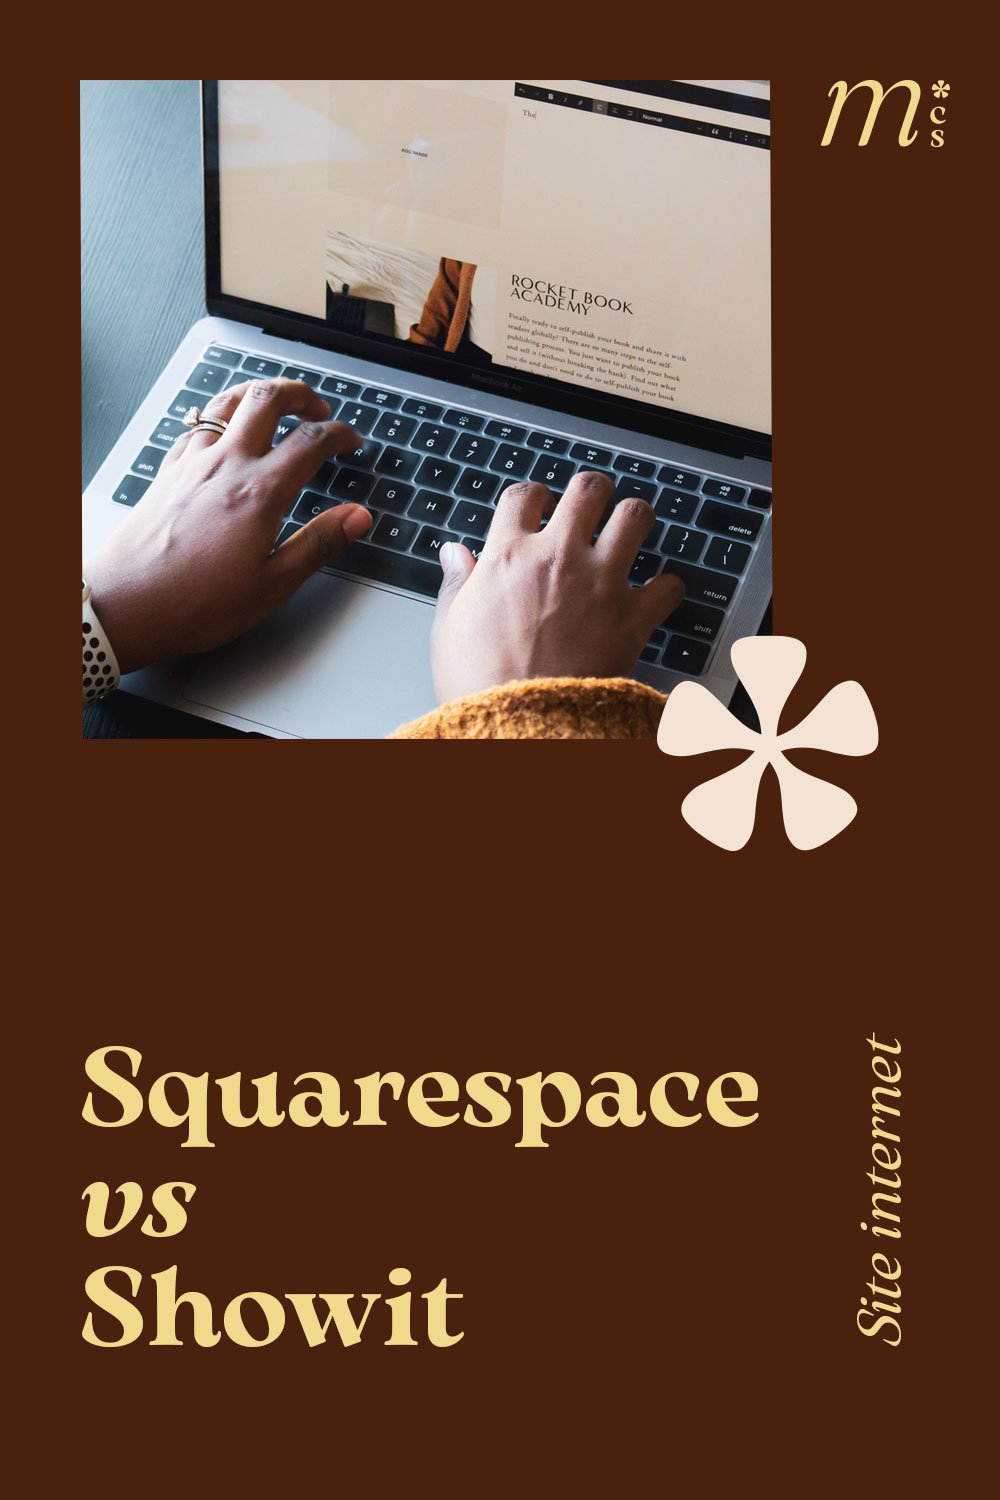 mysa-image-squarespaceshowit-1.jpg